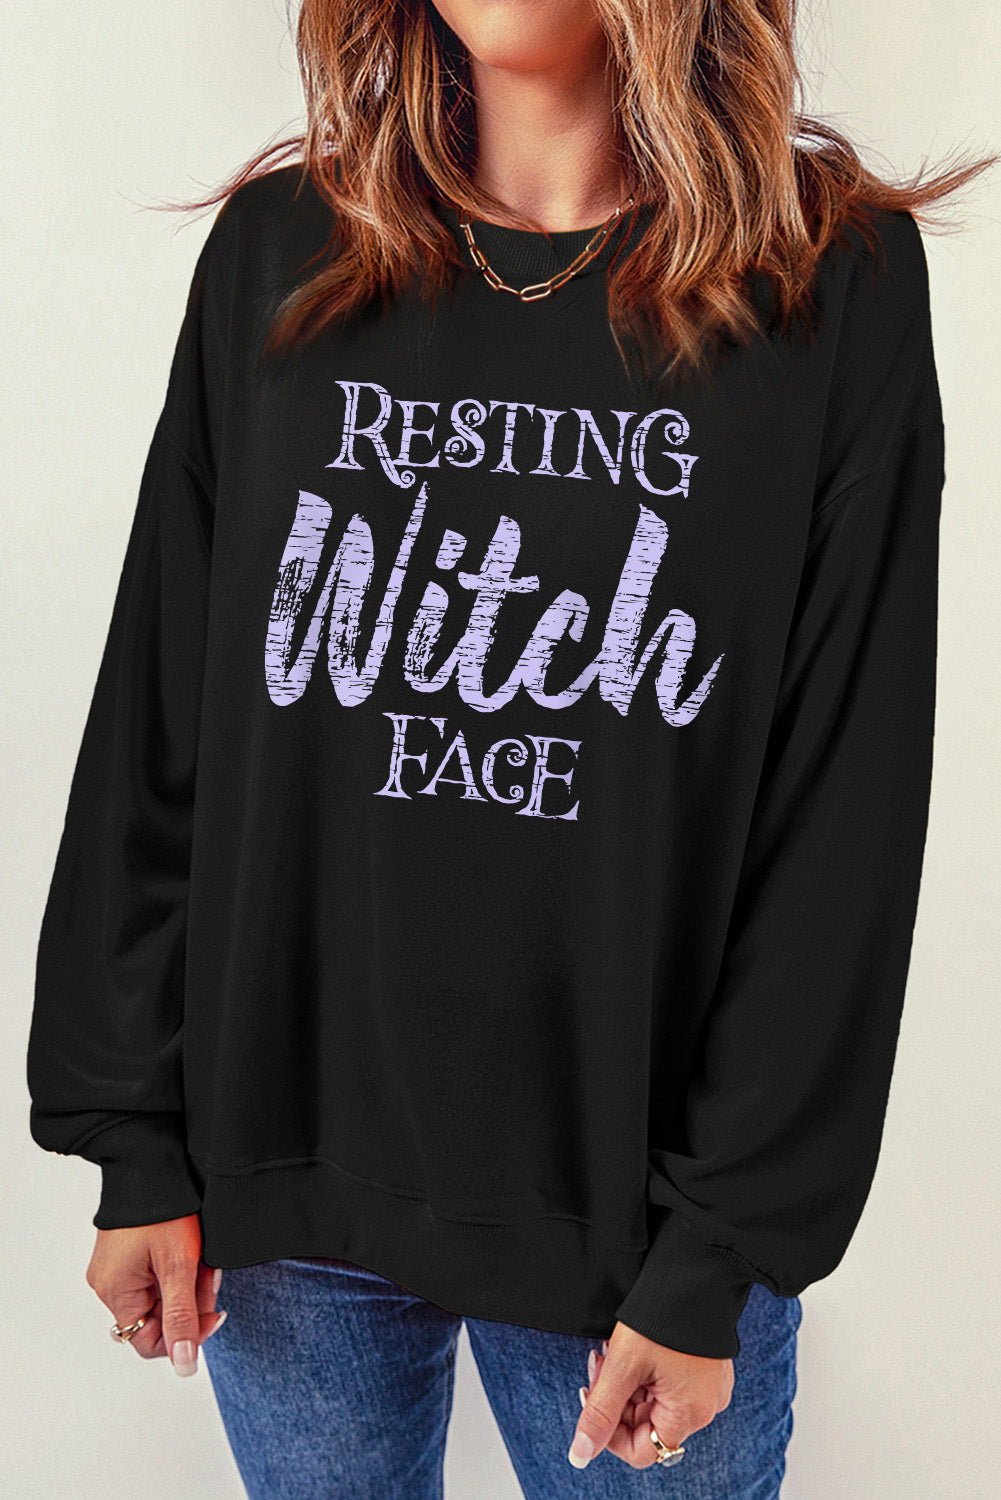 Black Halloween stay Spooky Graphic Sweatshirt